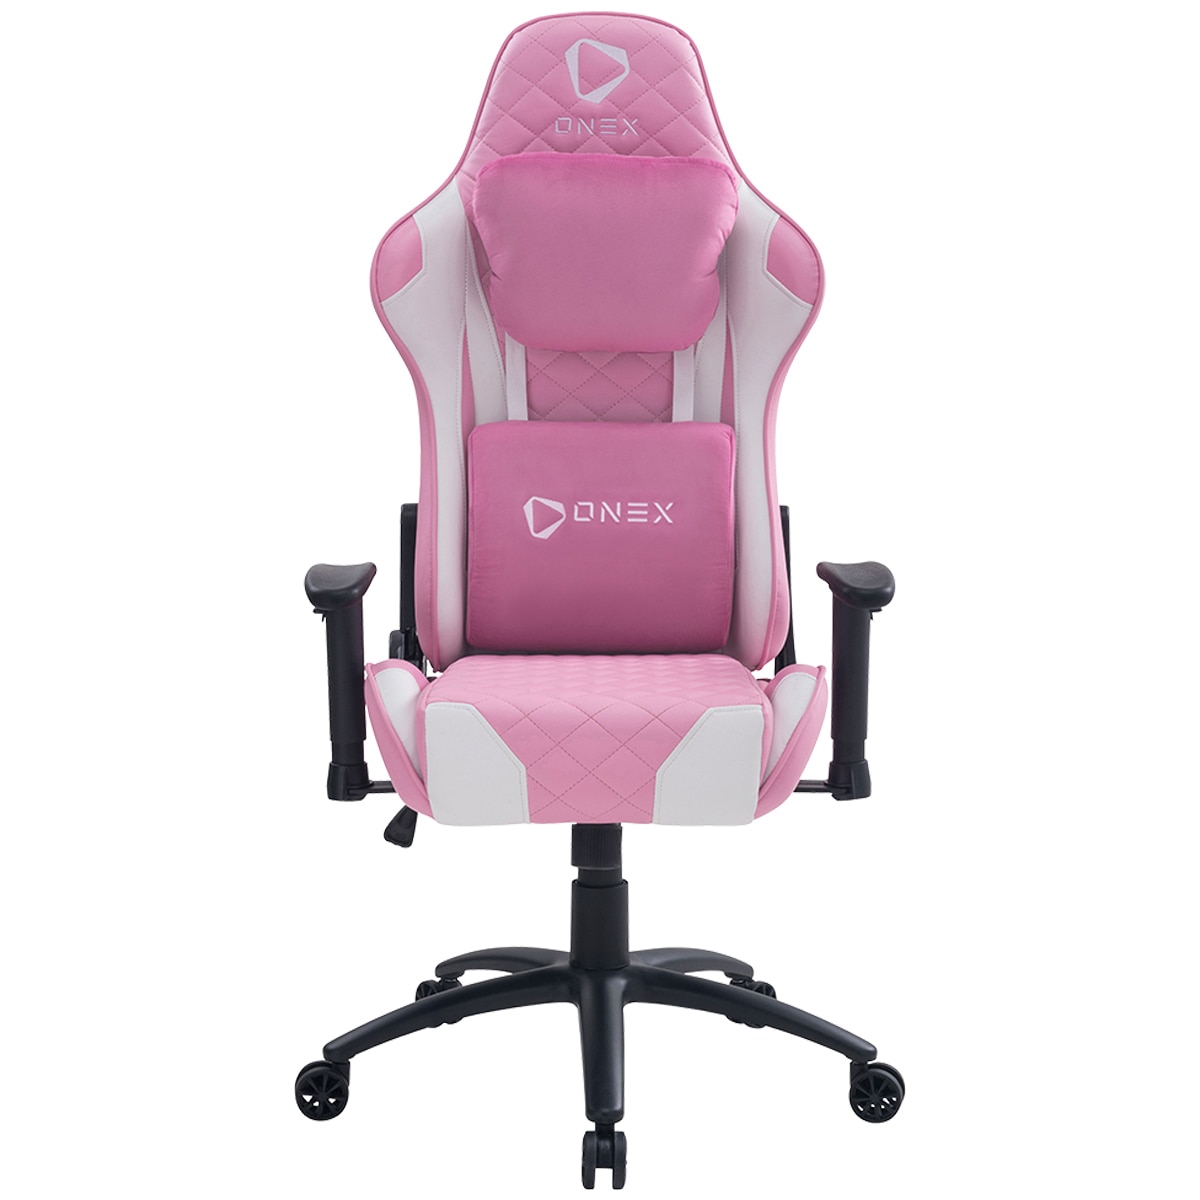 Onex Gx330 Series Gaming Chair Pink White Costco Australia